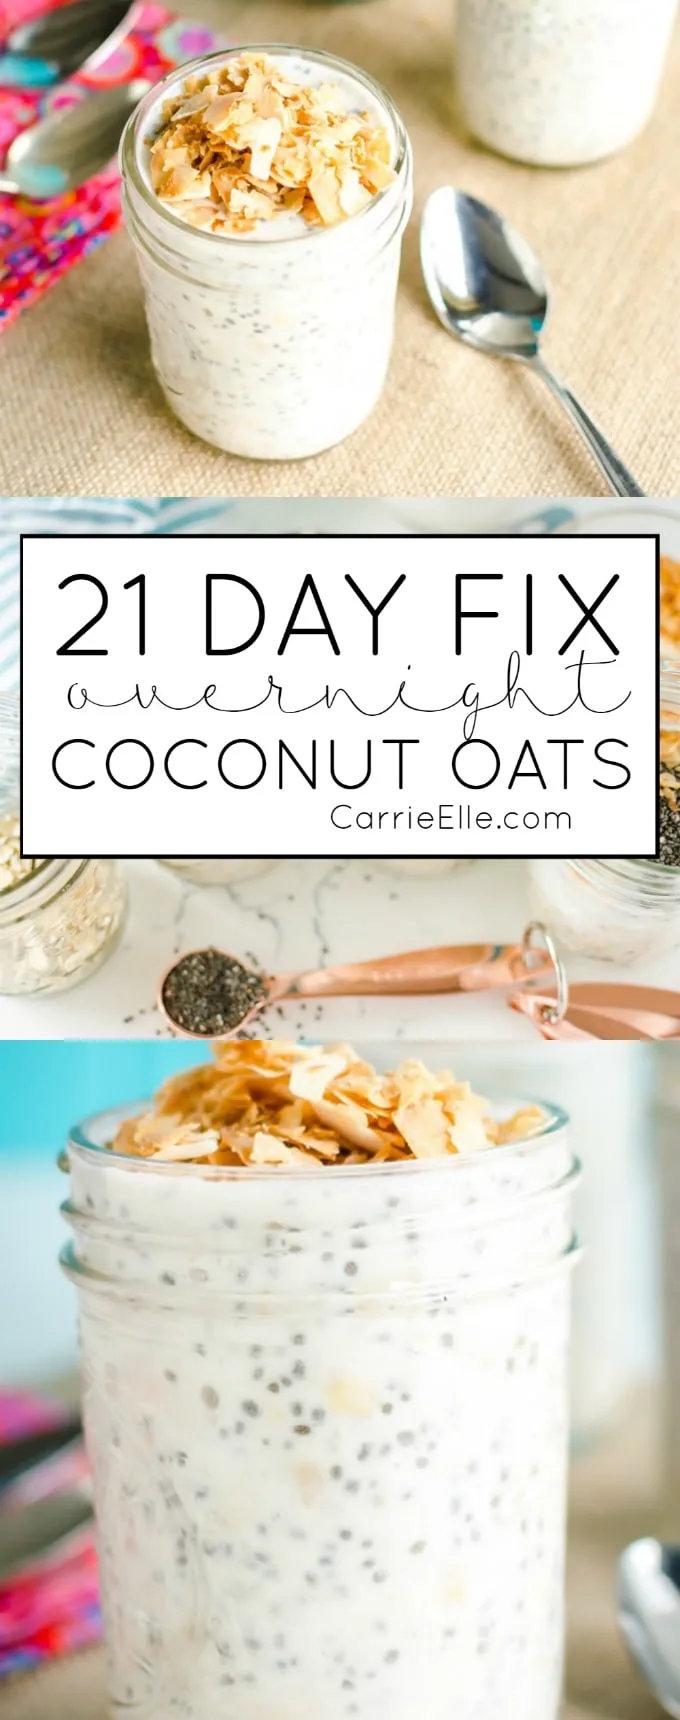 21 Day Fix Coconut Overnight Oats